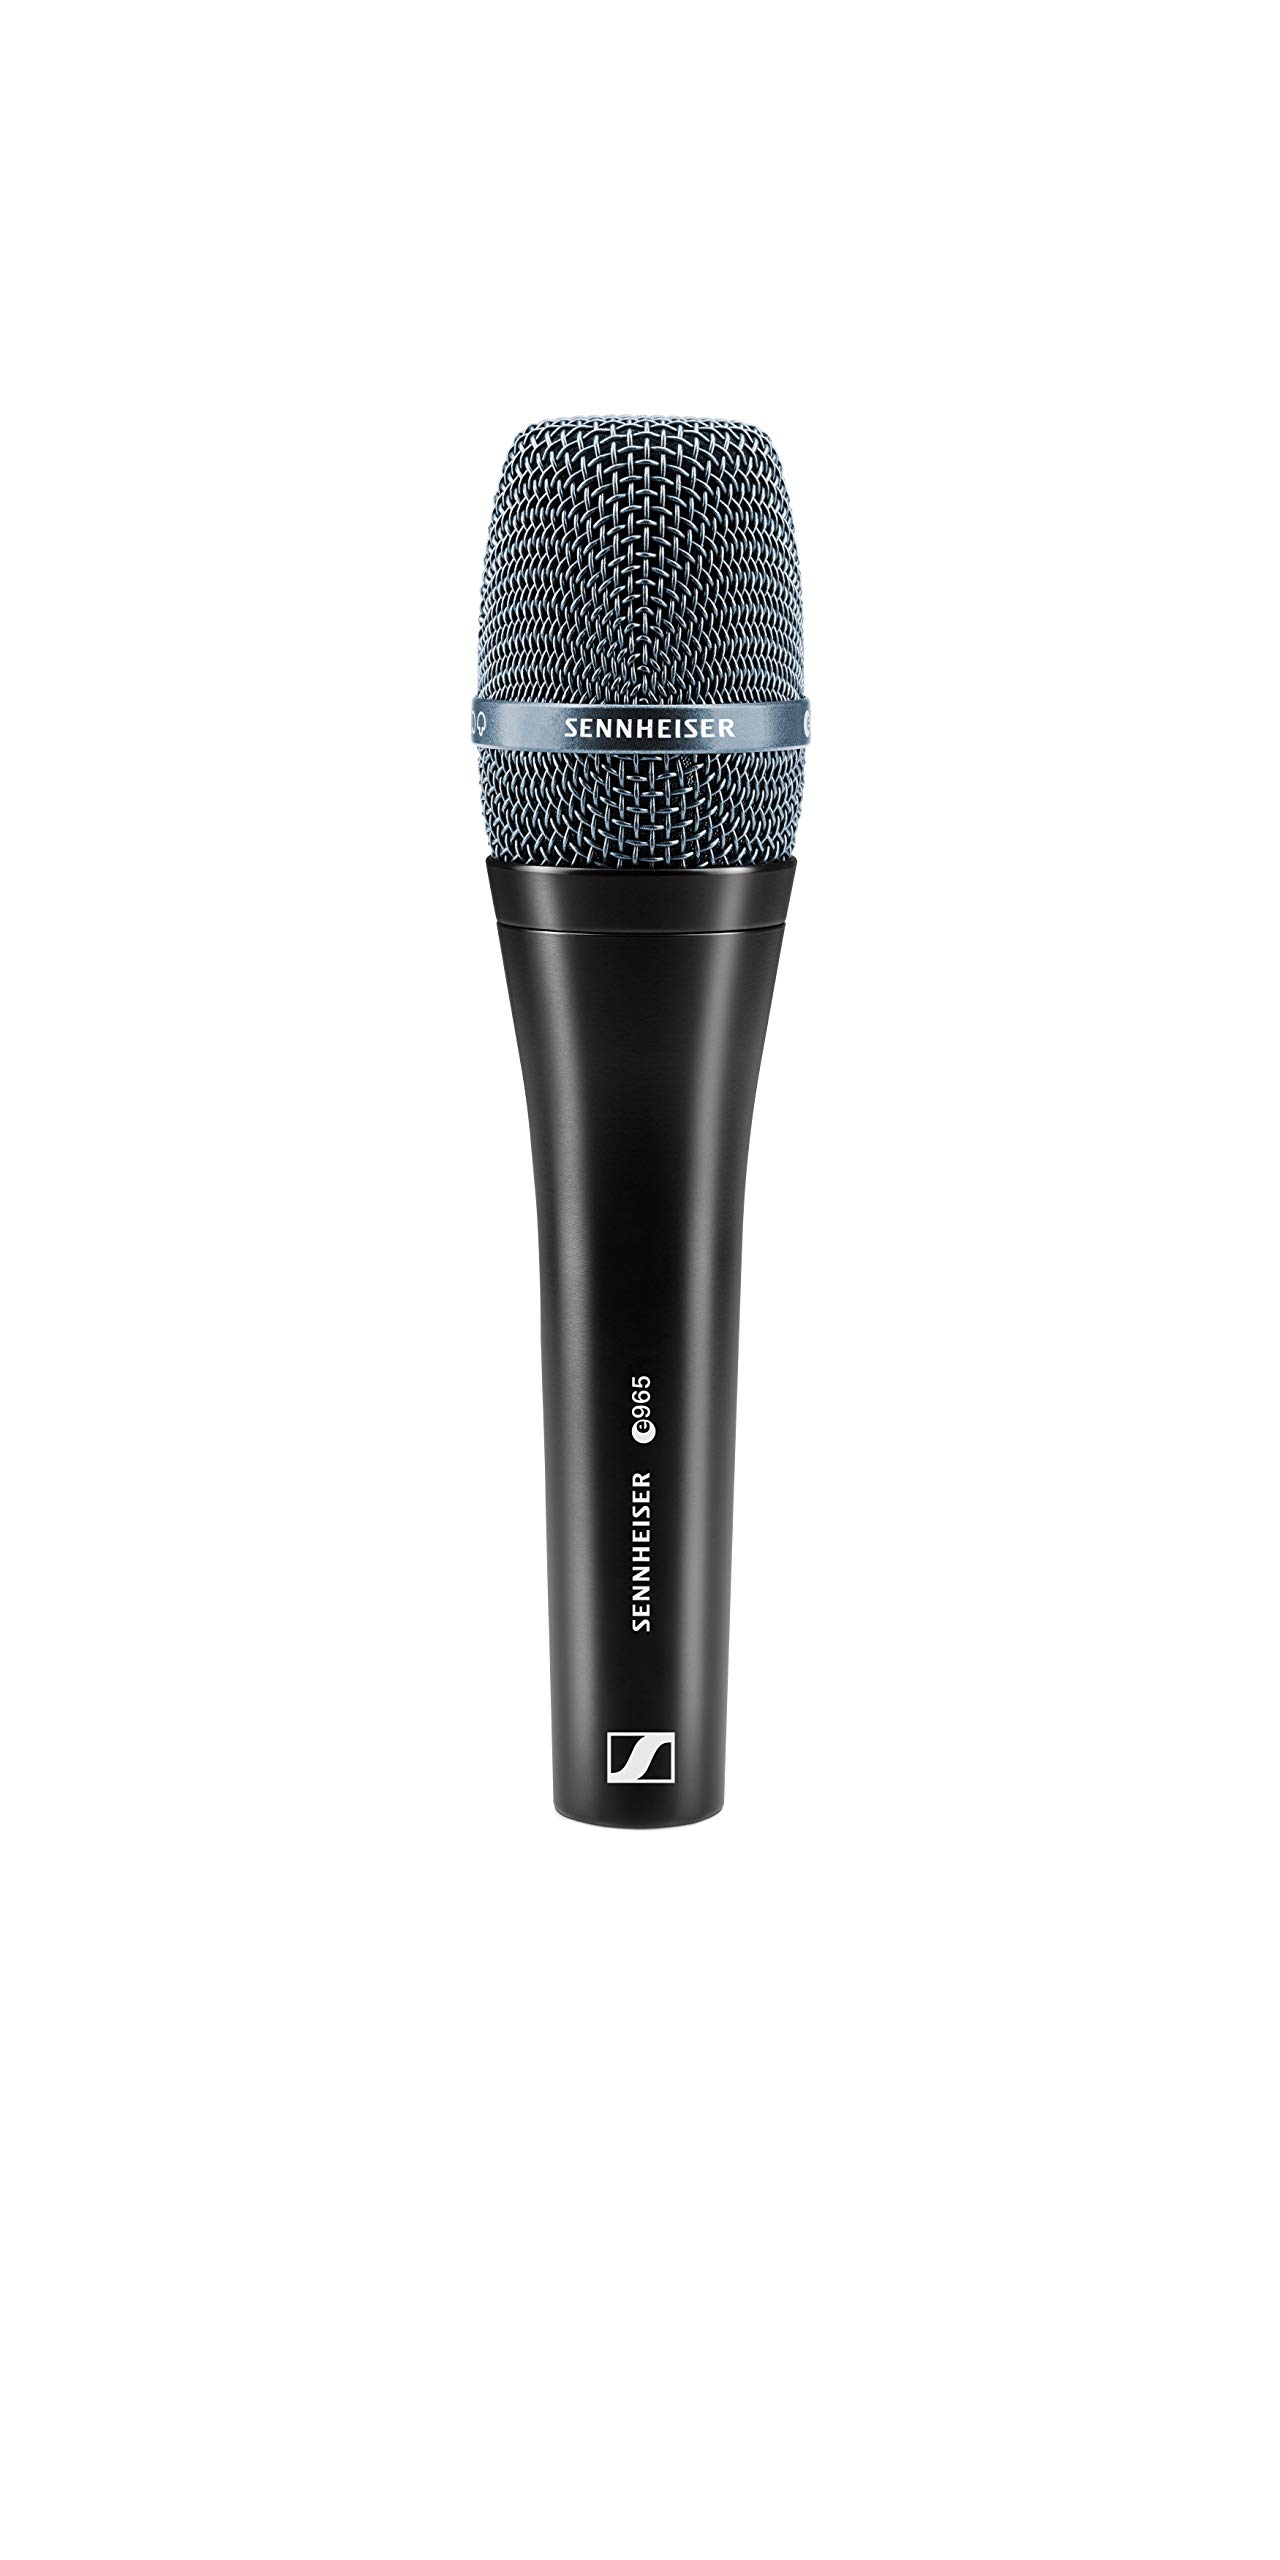 Sennheiser Pro Audio e 965 Large Diaphragm Condenser Handheld Microphone